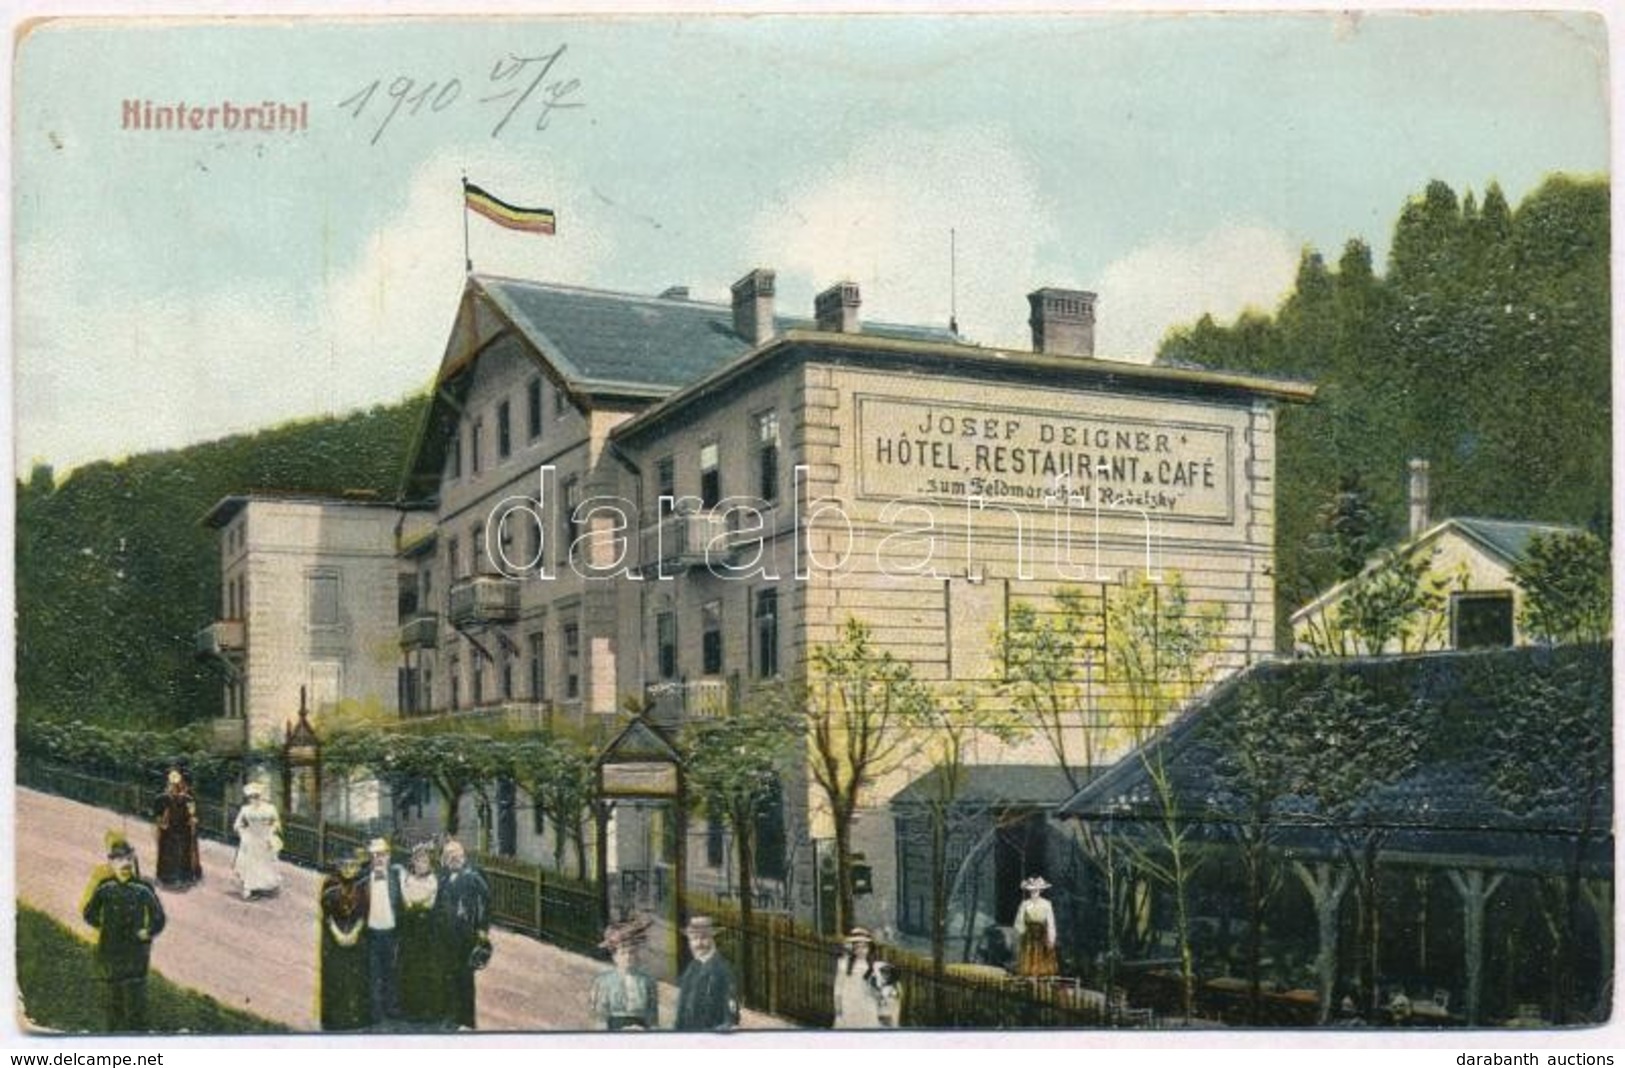 T2 1910 Hinterbrühl, Josef Deigner Hotel, Restaurant And Cafe 'zum Feldmarschall Radetzky'. Emb. - Unclassified